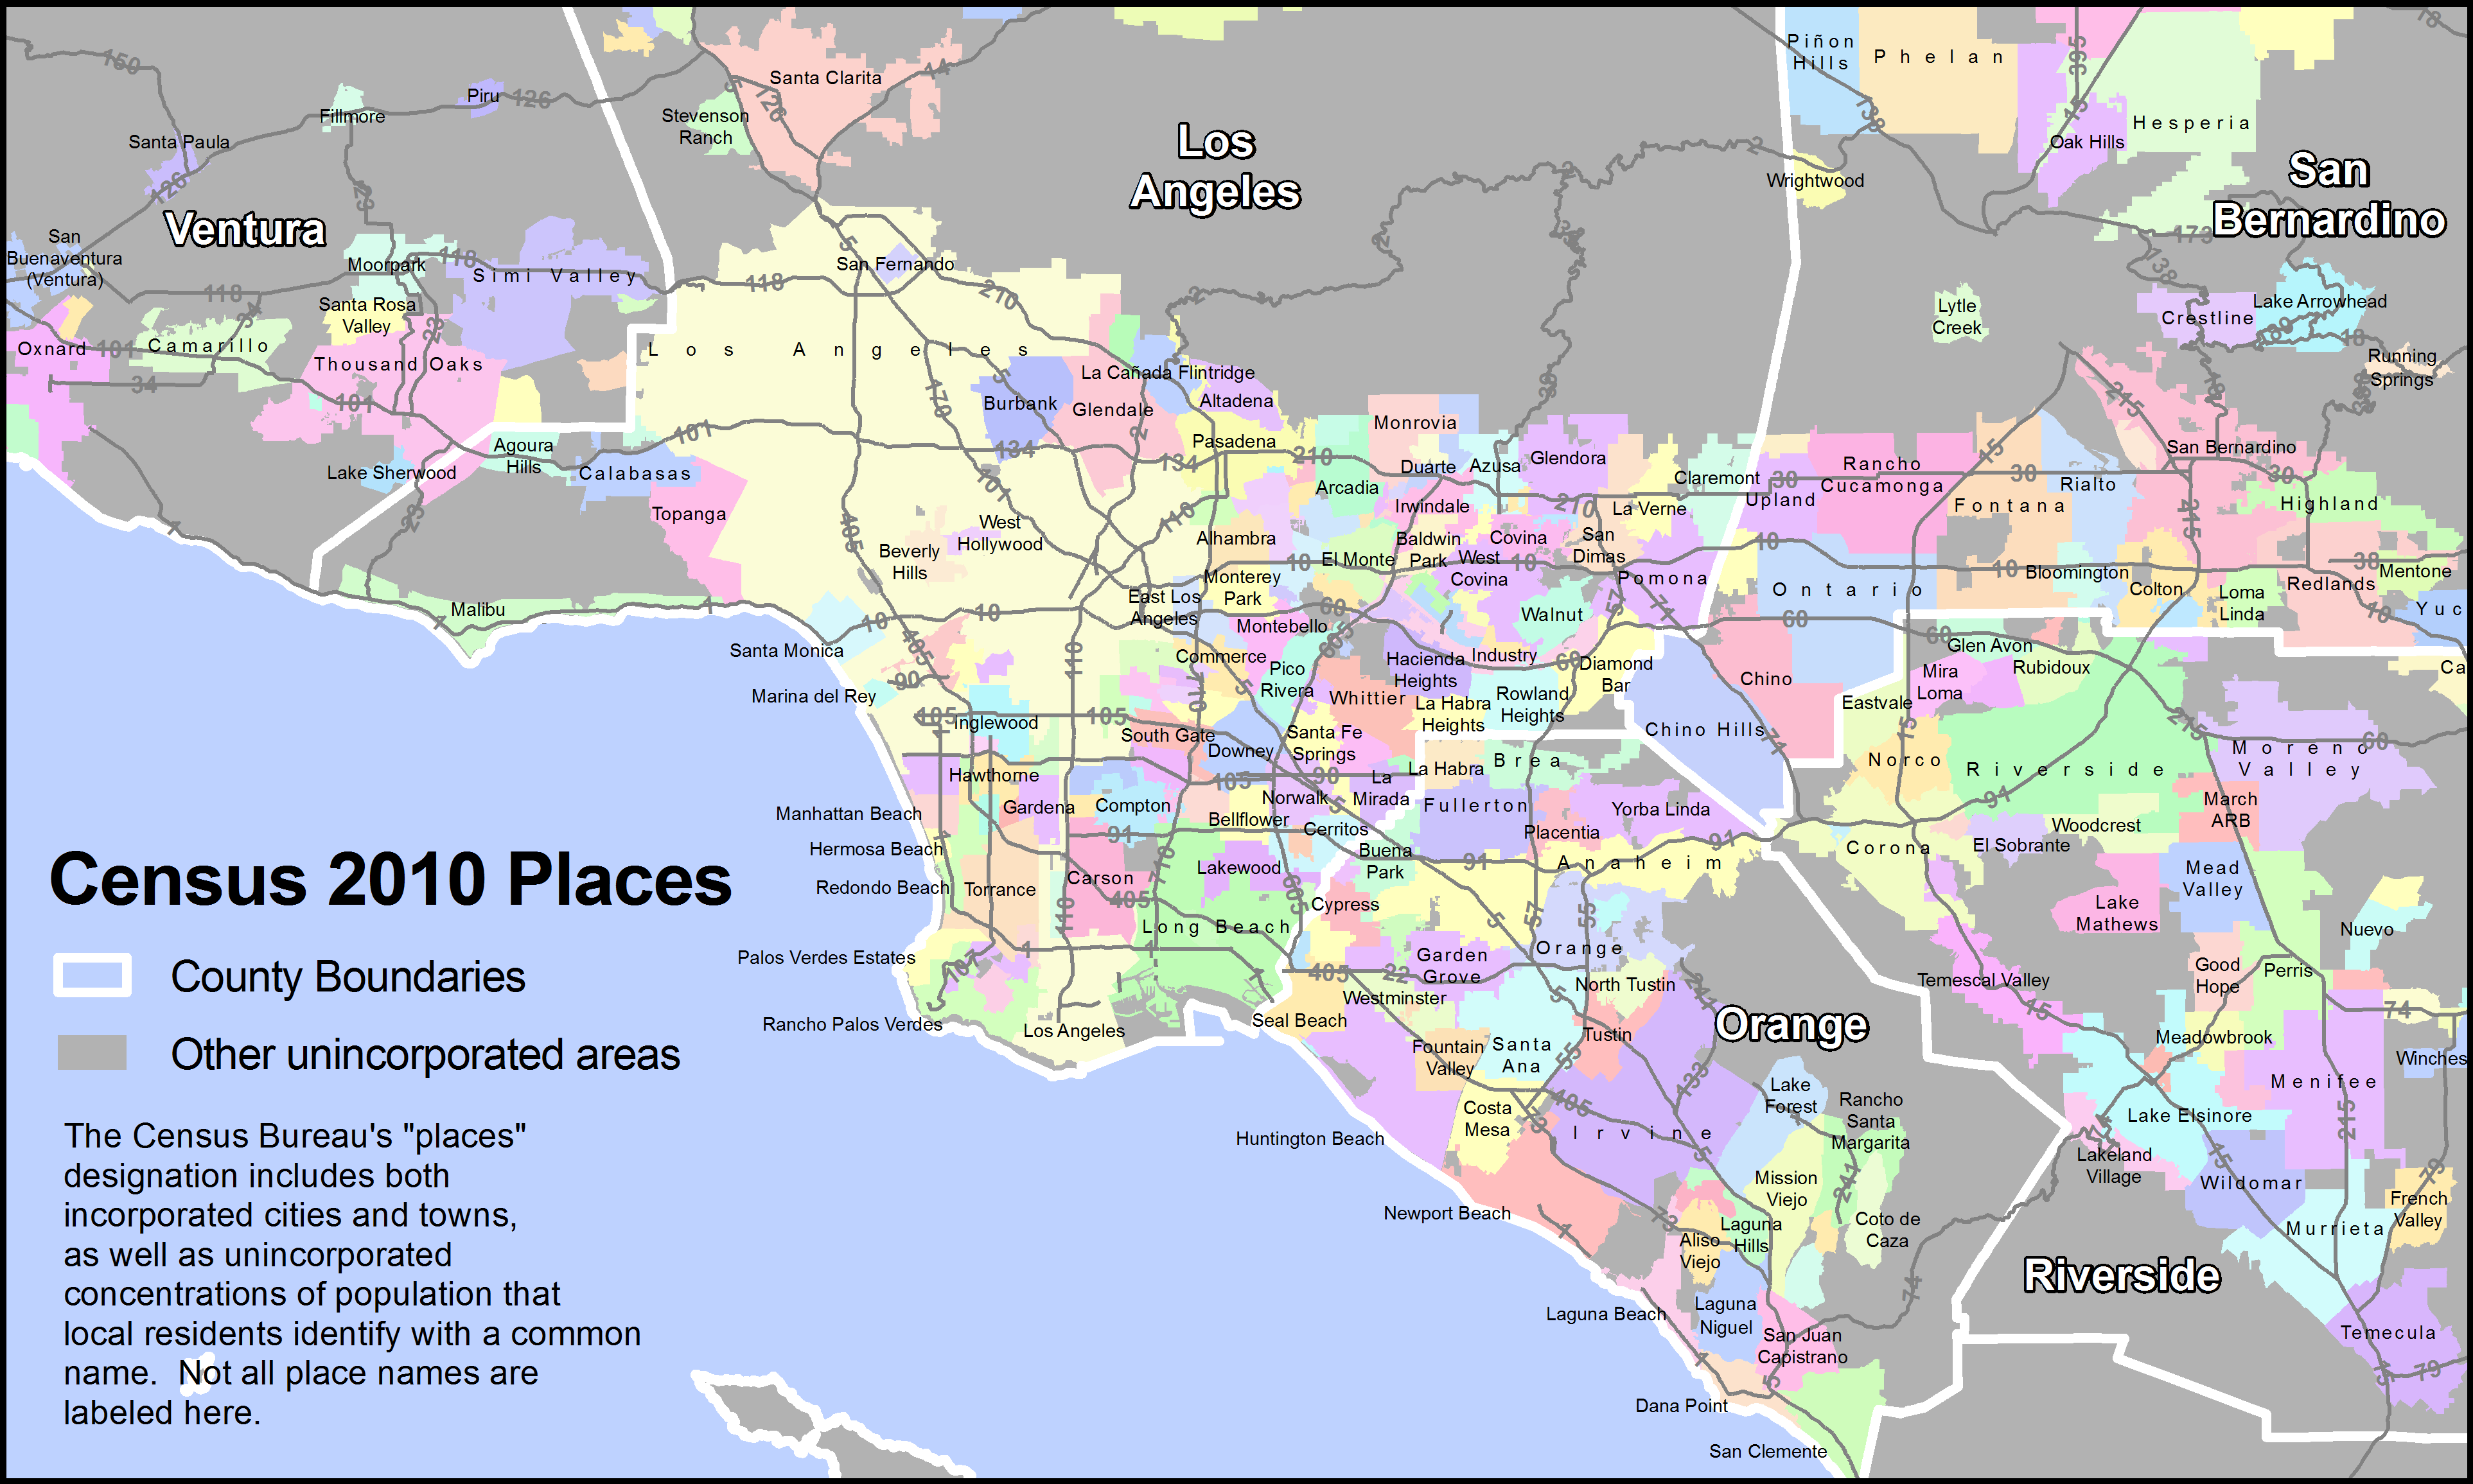 angeles),简称洛城,是位于美国加利福尼亚州南部的都市,也是洛杉矶县